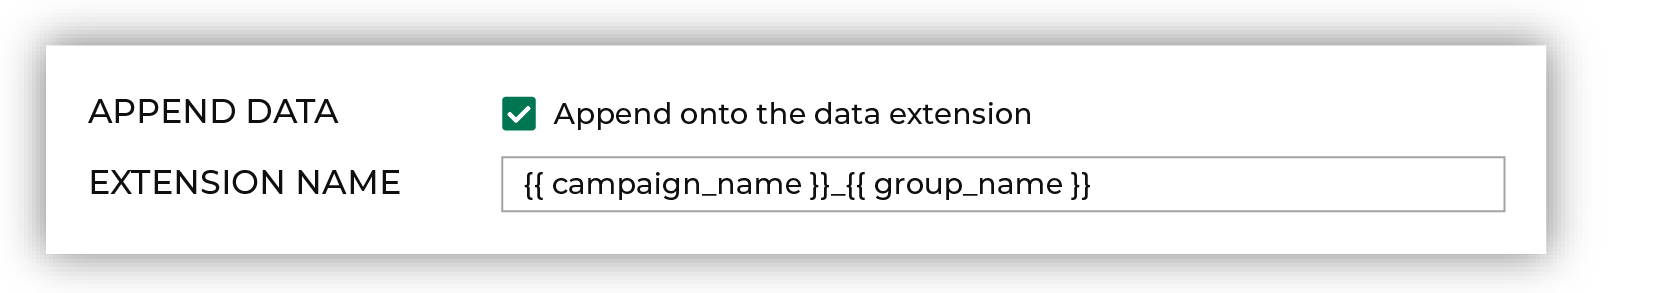 Configure data extension settings.